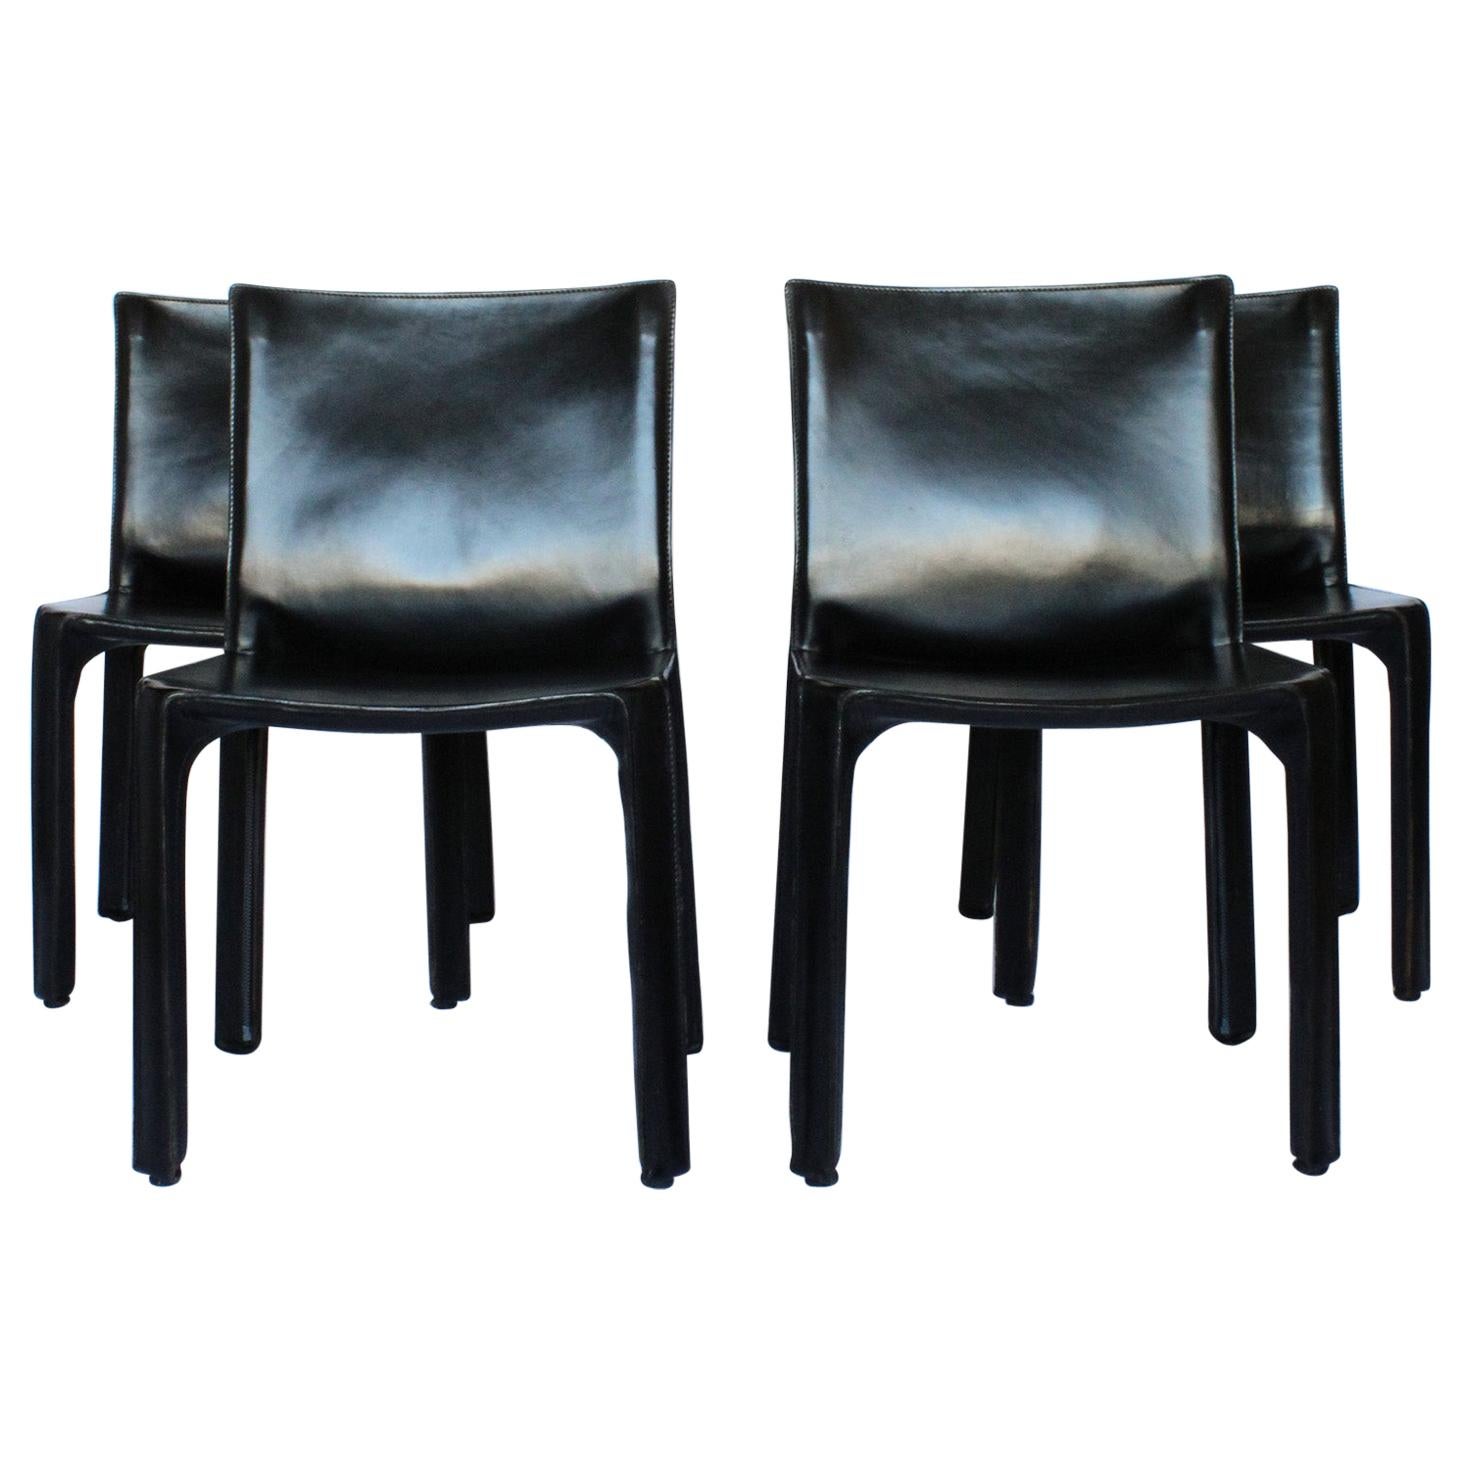 Mario Bellini Set of 4 Cab Chairs, Cassina Black Leather